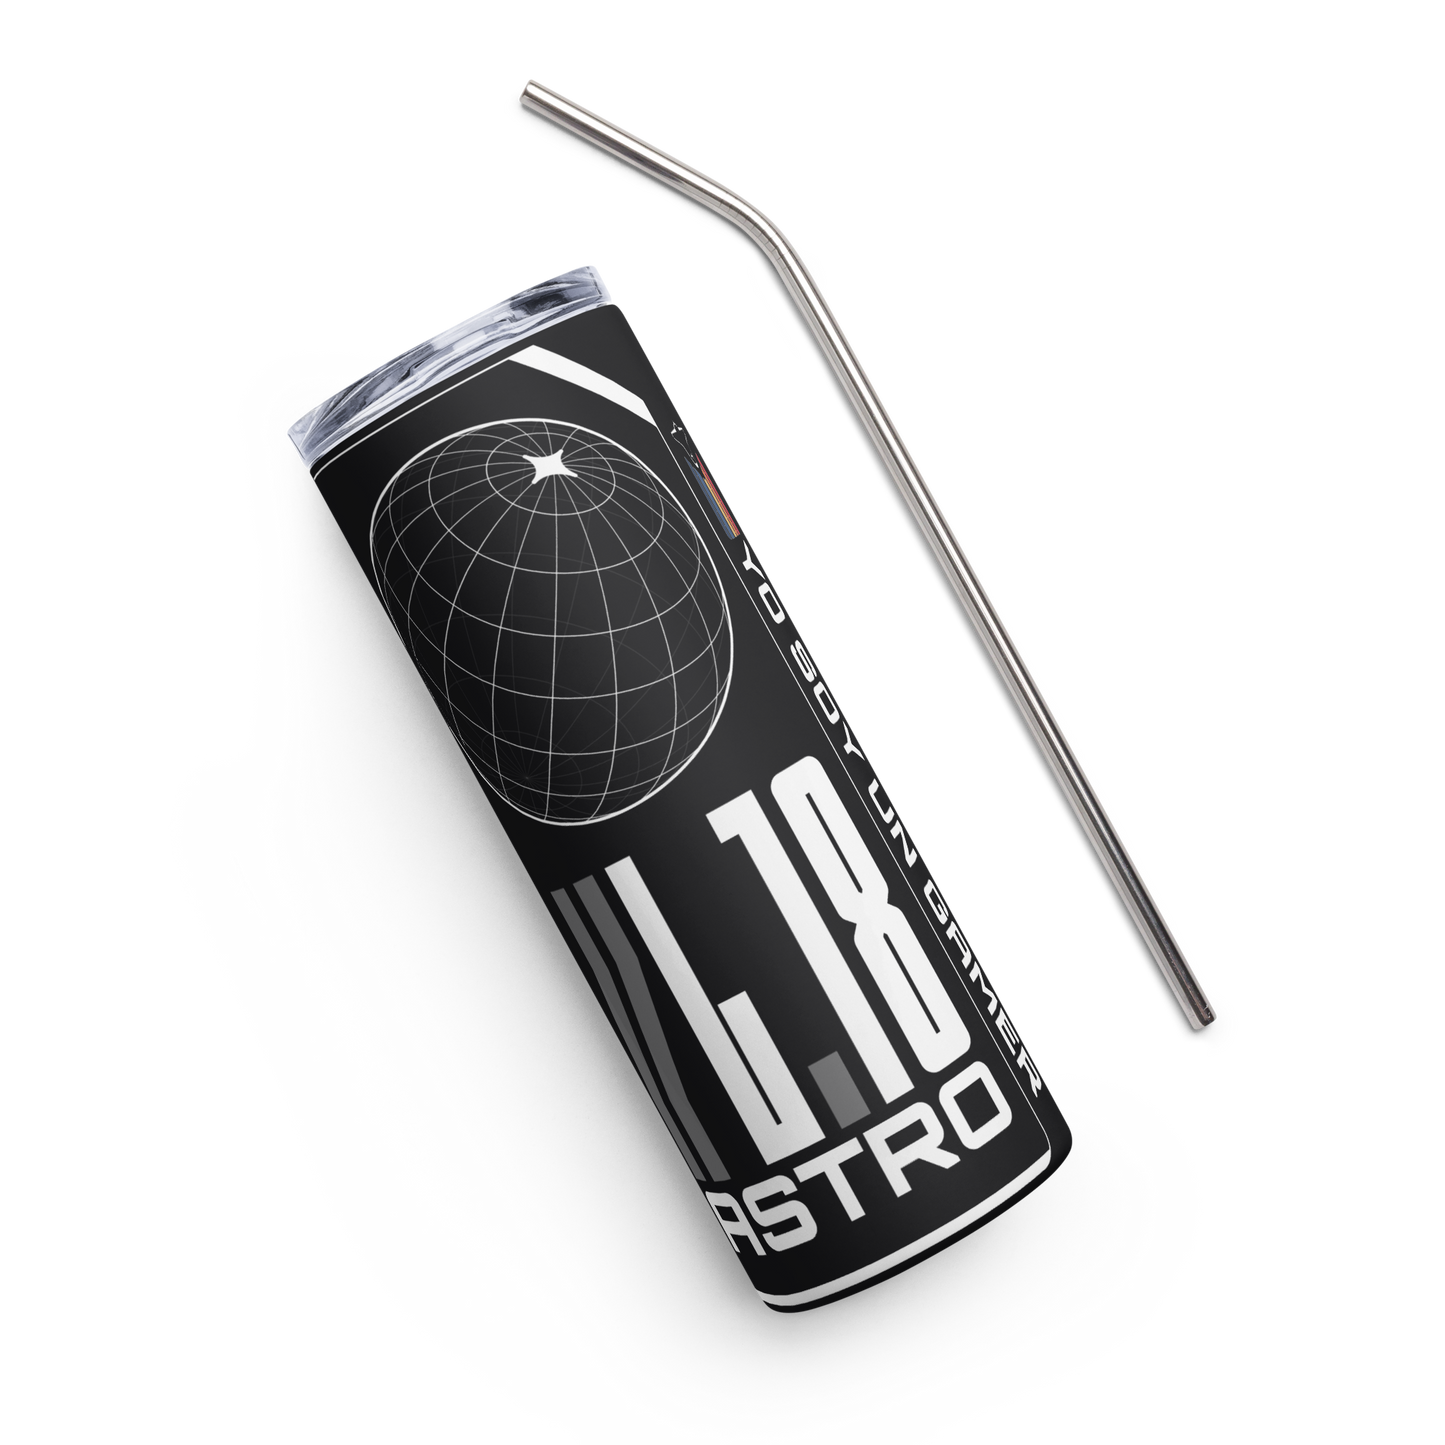 YSUG Astro - Stainless steel tumbler